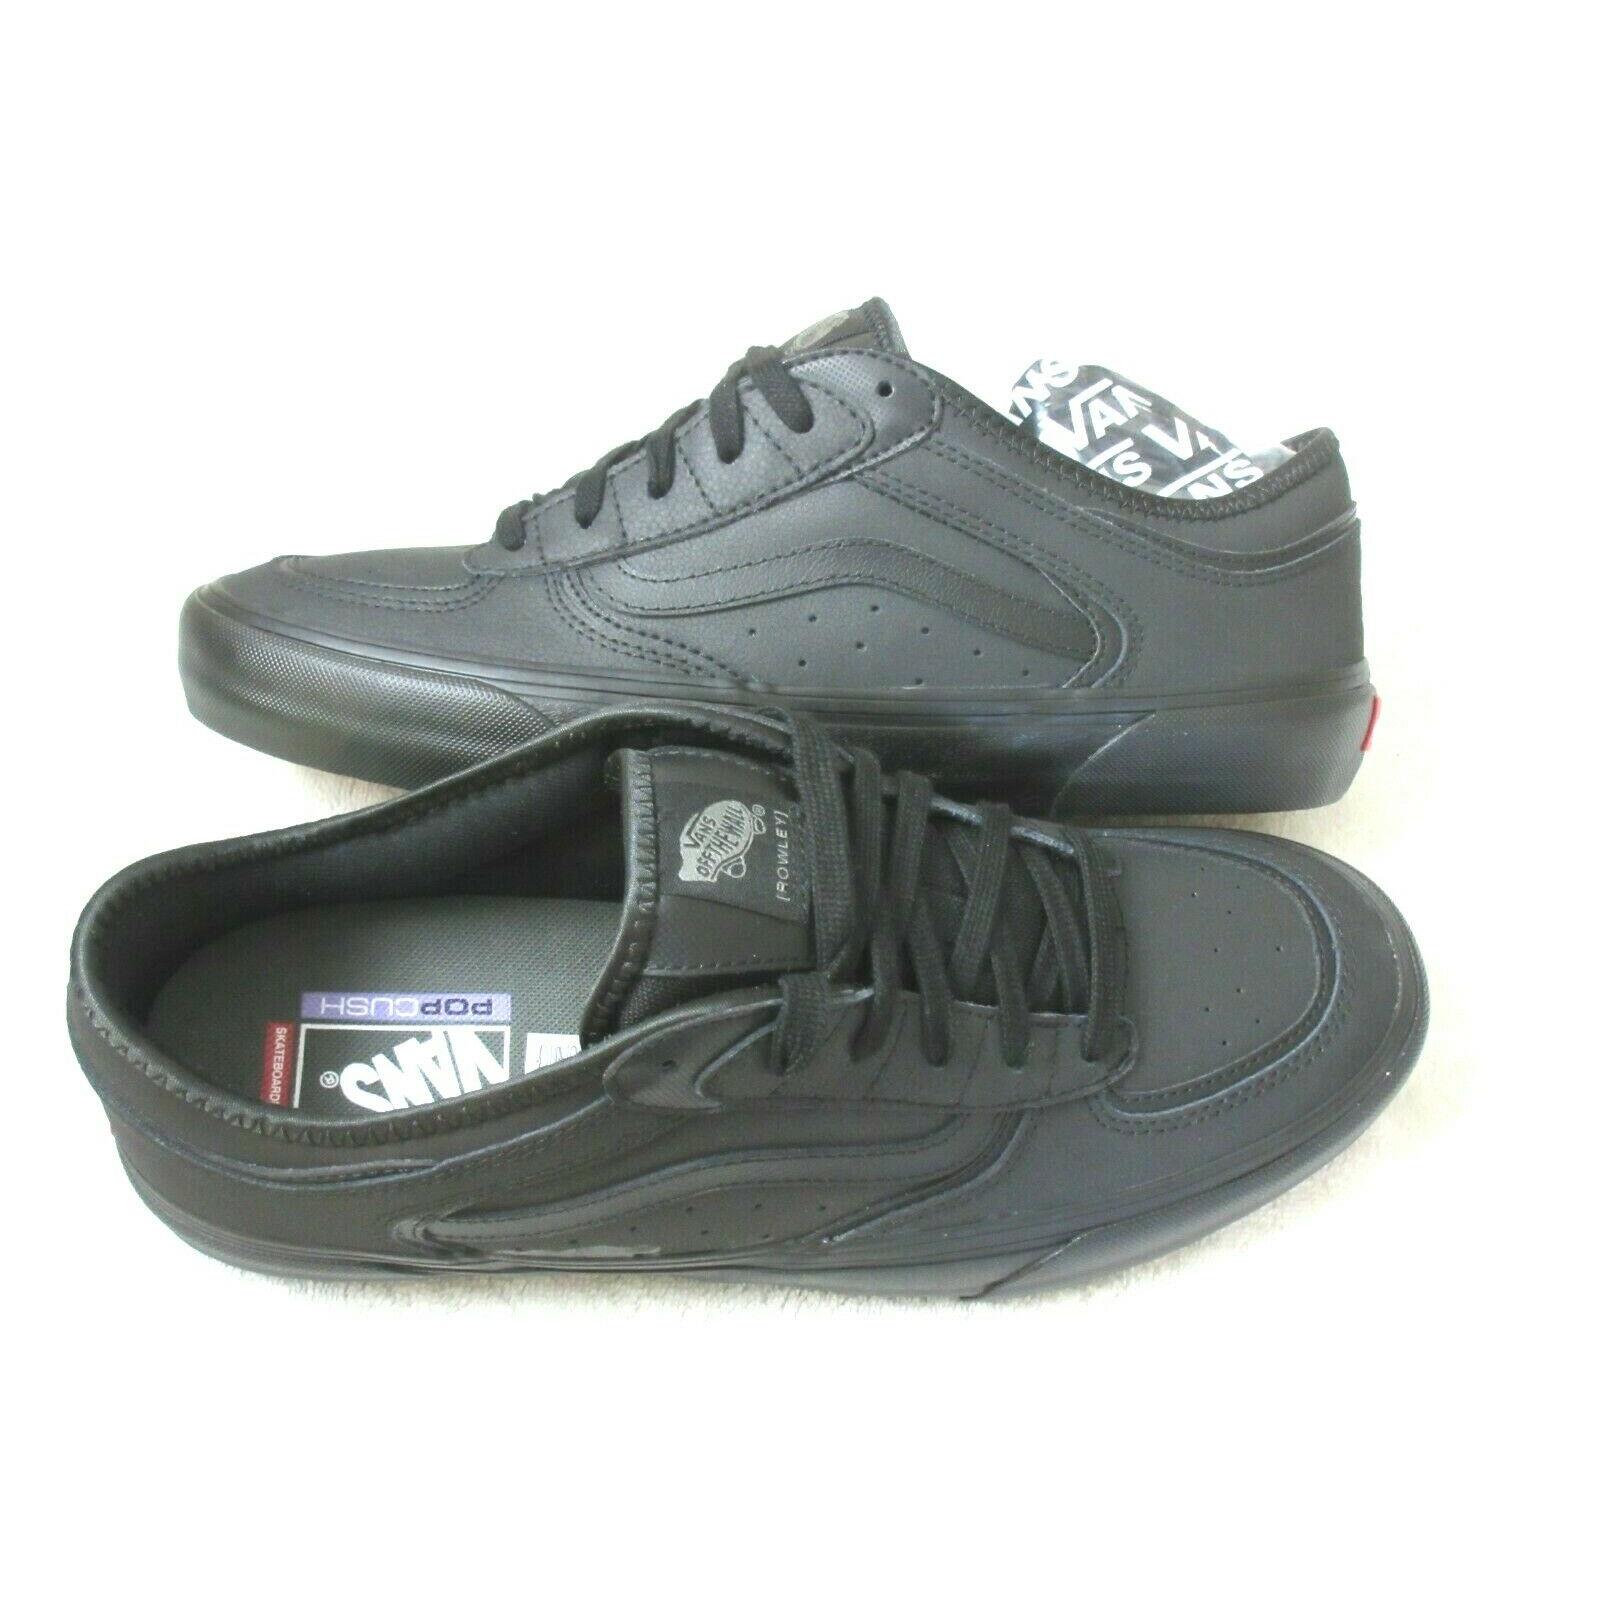 Vans Men`s Geoff Rowley Popcush Skate Shoes All Black Size 9.5 VN0A5KQTBKA